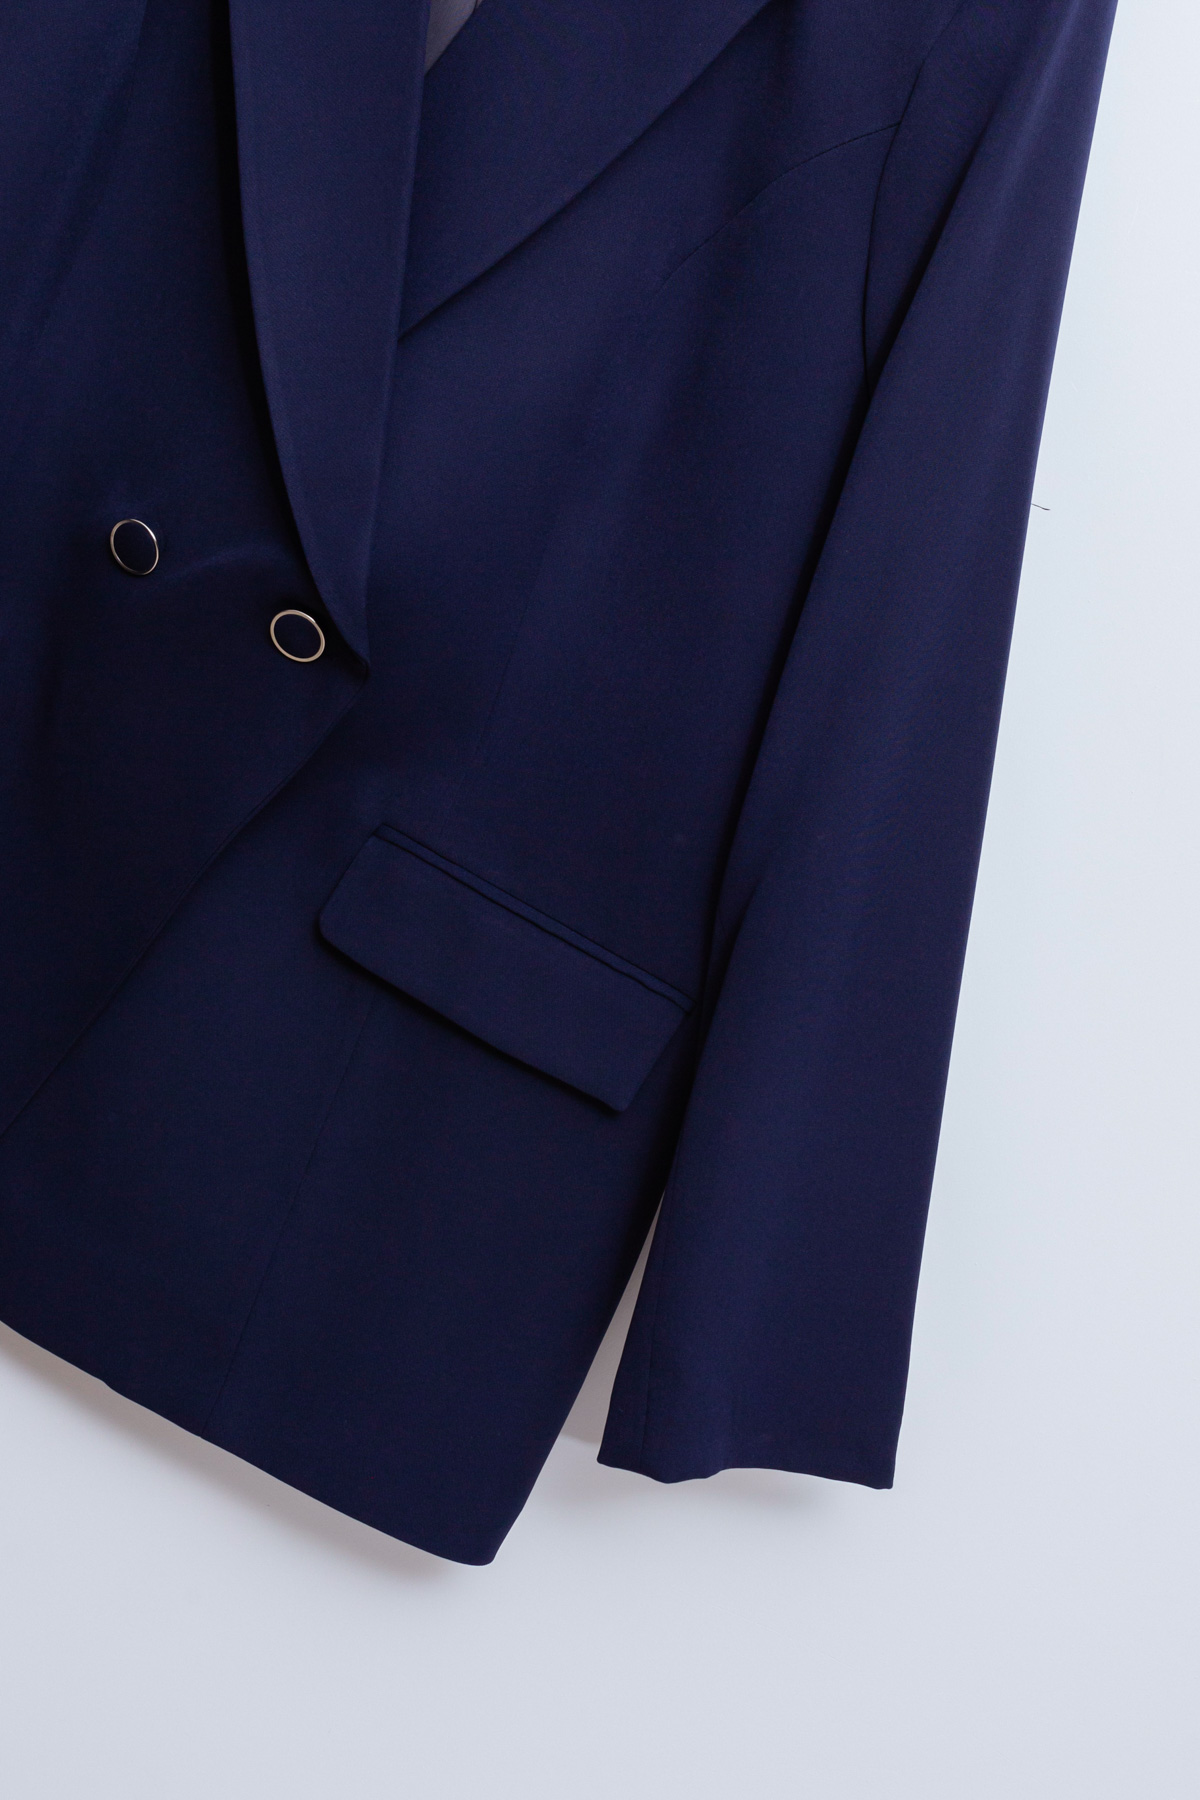 Women's Navy Blue Single Button Plus Size Jacket - 21Y057131-BBR21